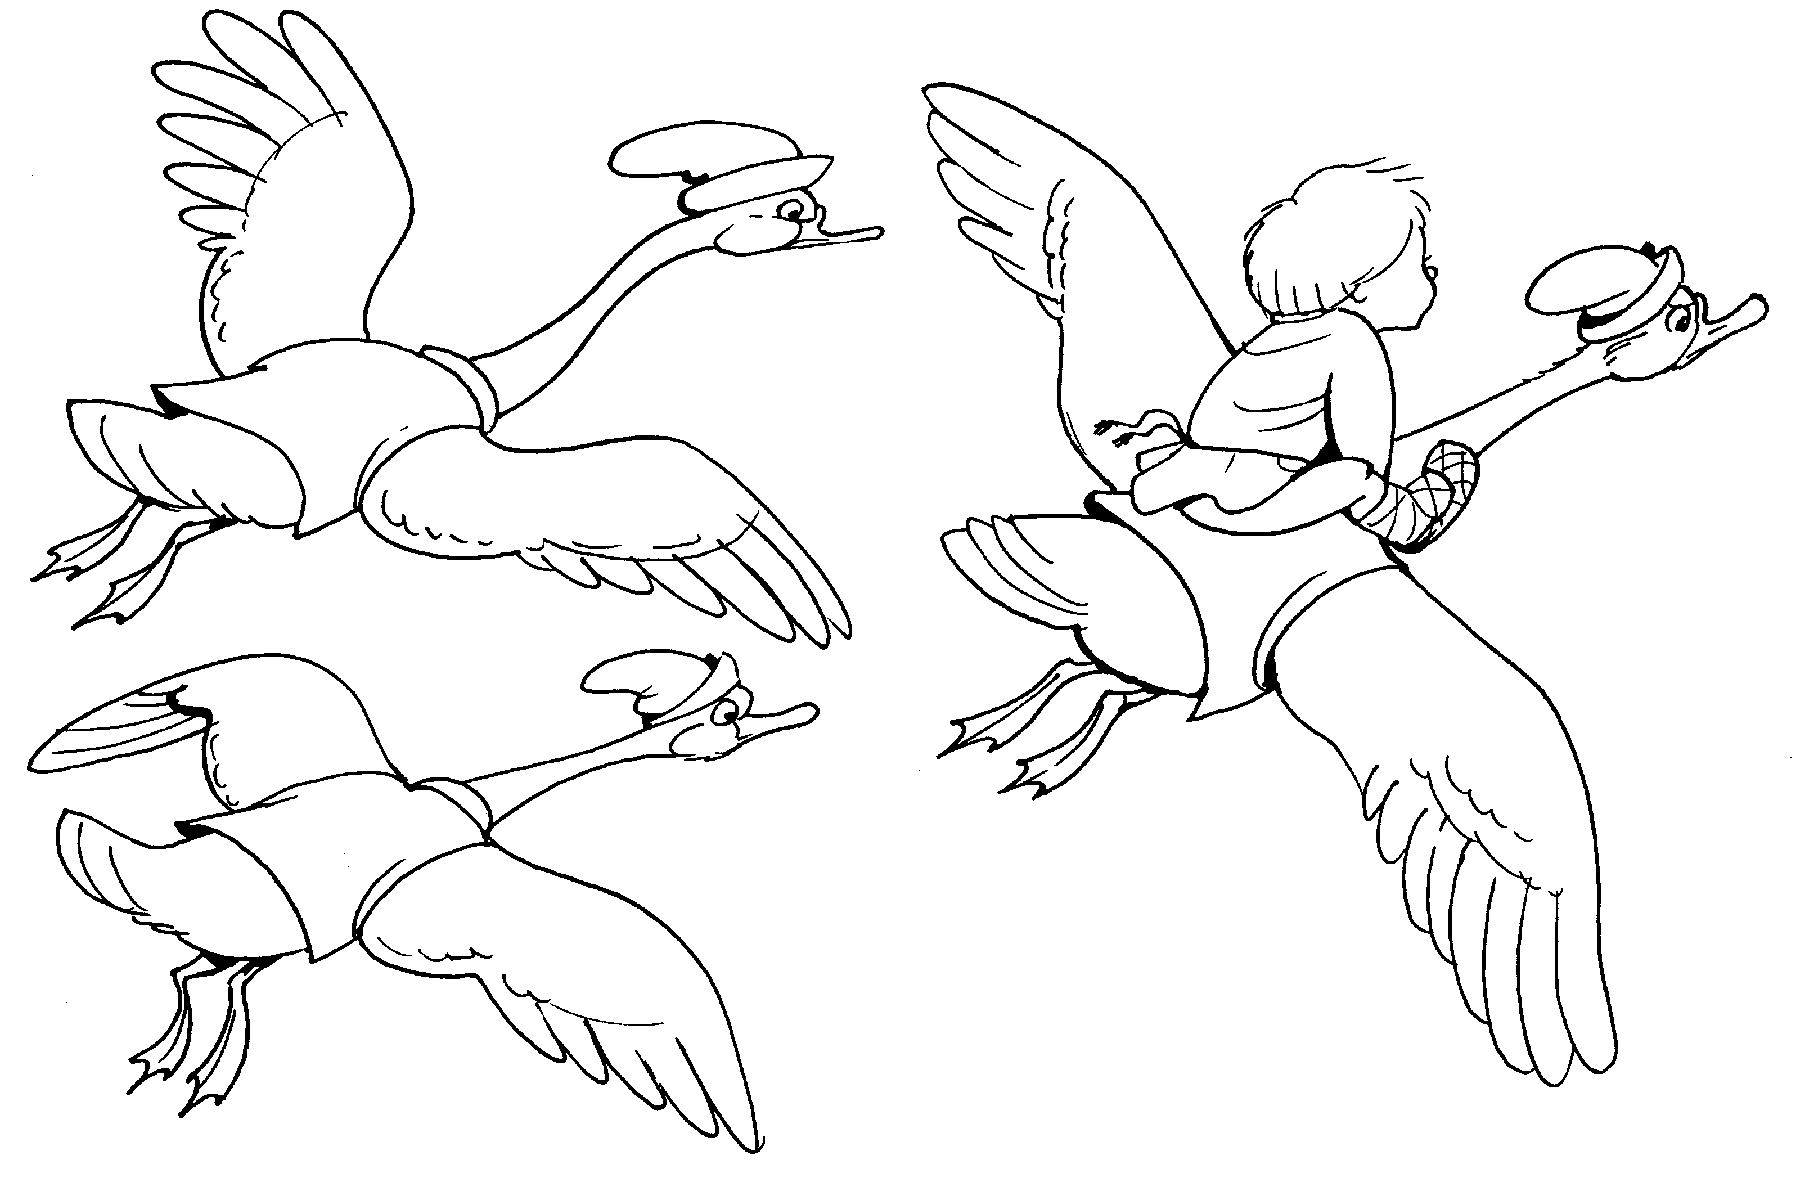 Розмальовки розмальовки до казки гуси лебеді гуси-лебеді забирають братика, розфарбування казка